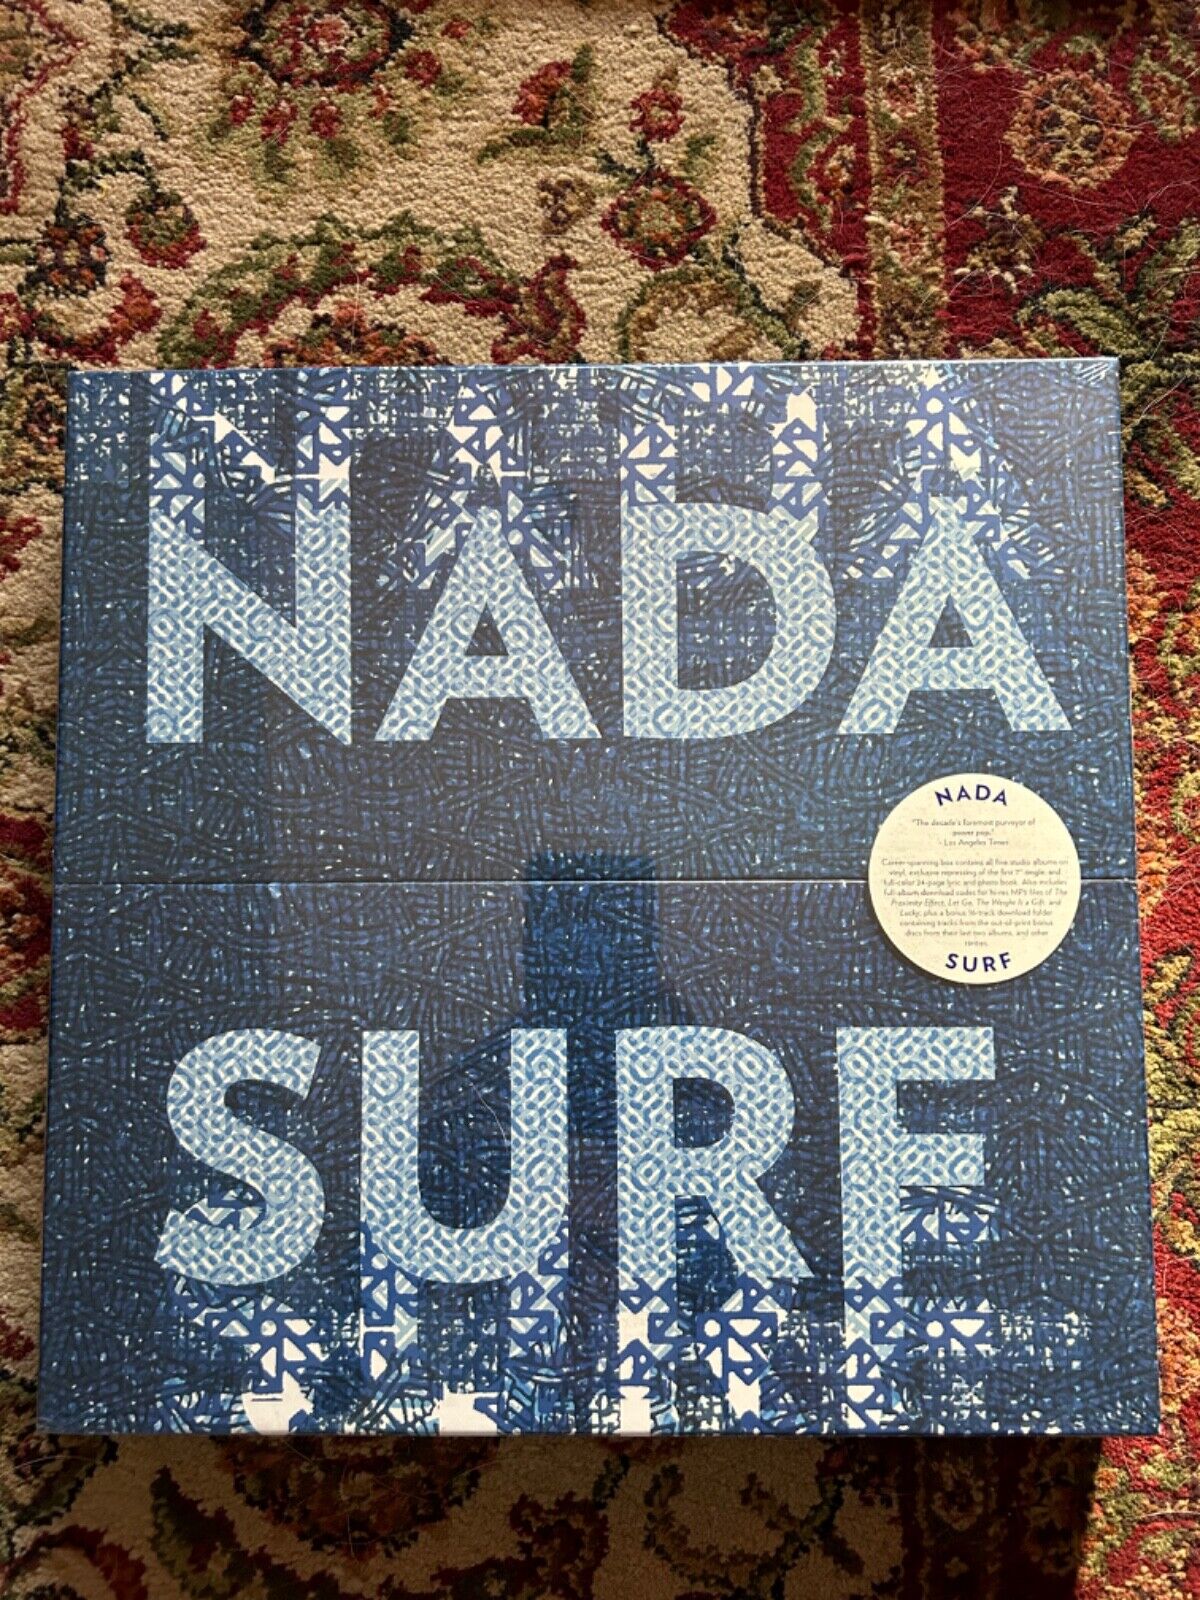 NADA SURF limited 6x Vinyl LP + 7" Vinyl Box 1994-2008 (Rare Ltd Release)